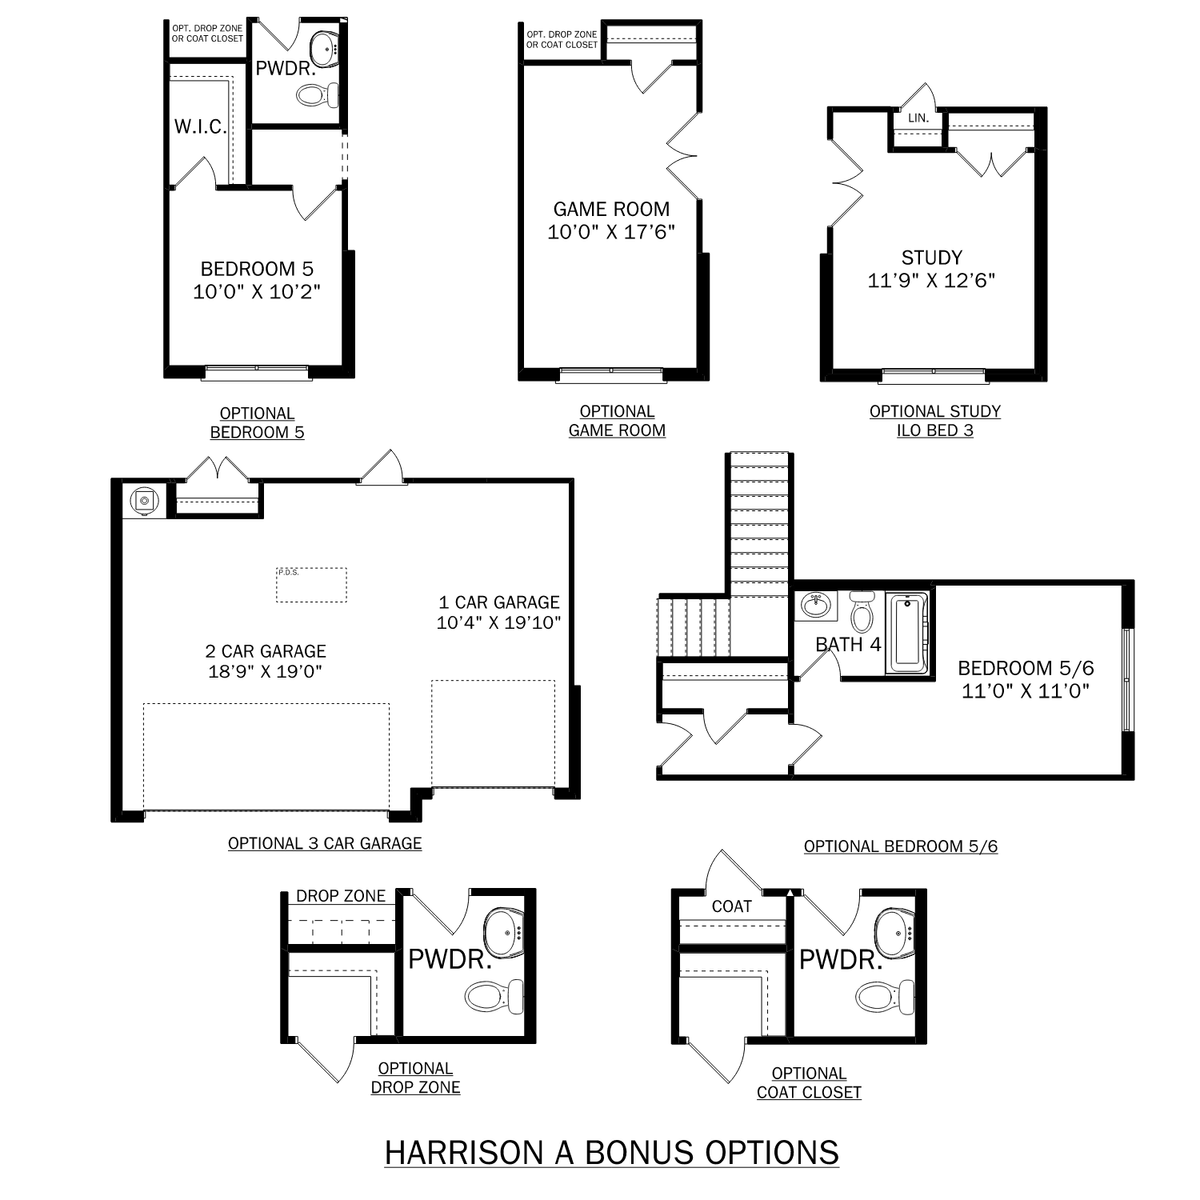 3 - The Harrison with Bonus floor plan layout for 114 Slade Thomas Drive in Davidson Homes' Pikes Ridge community.